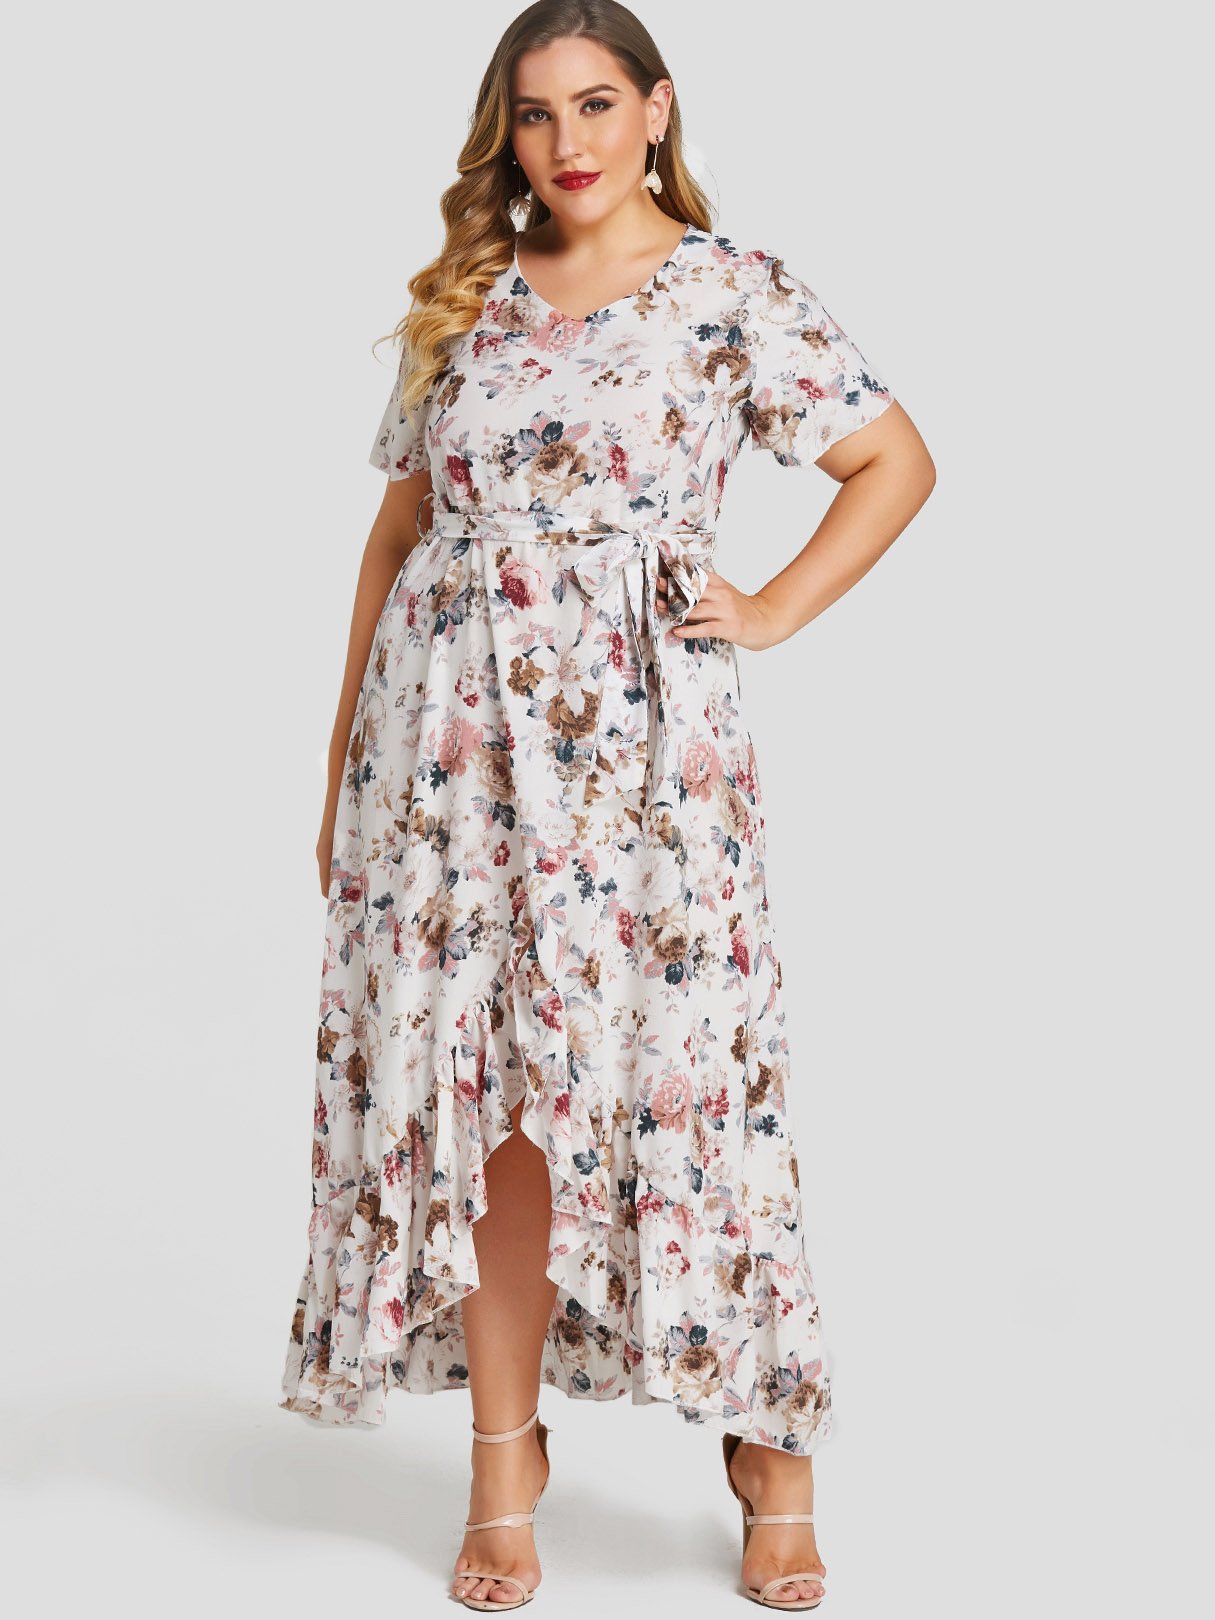 Wholesale V-Neck Floral Print Self-Tie Short Sleeve Ruffle Hem White Plus Size Dress